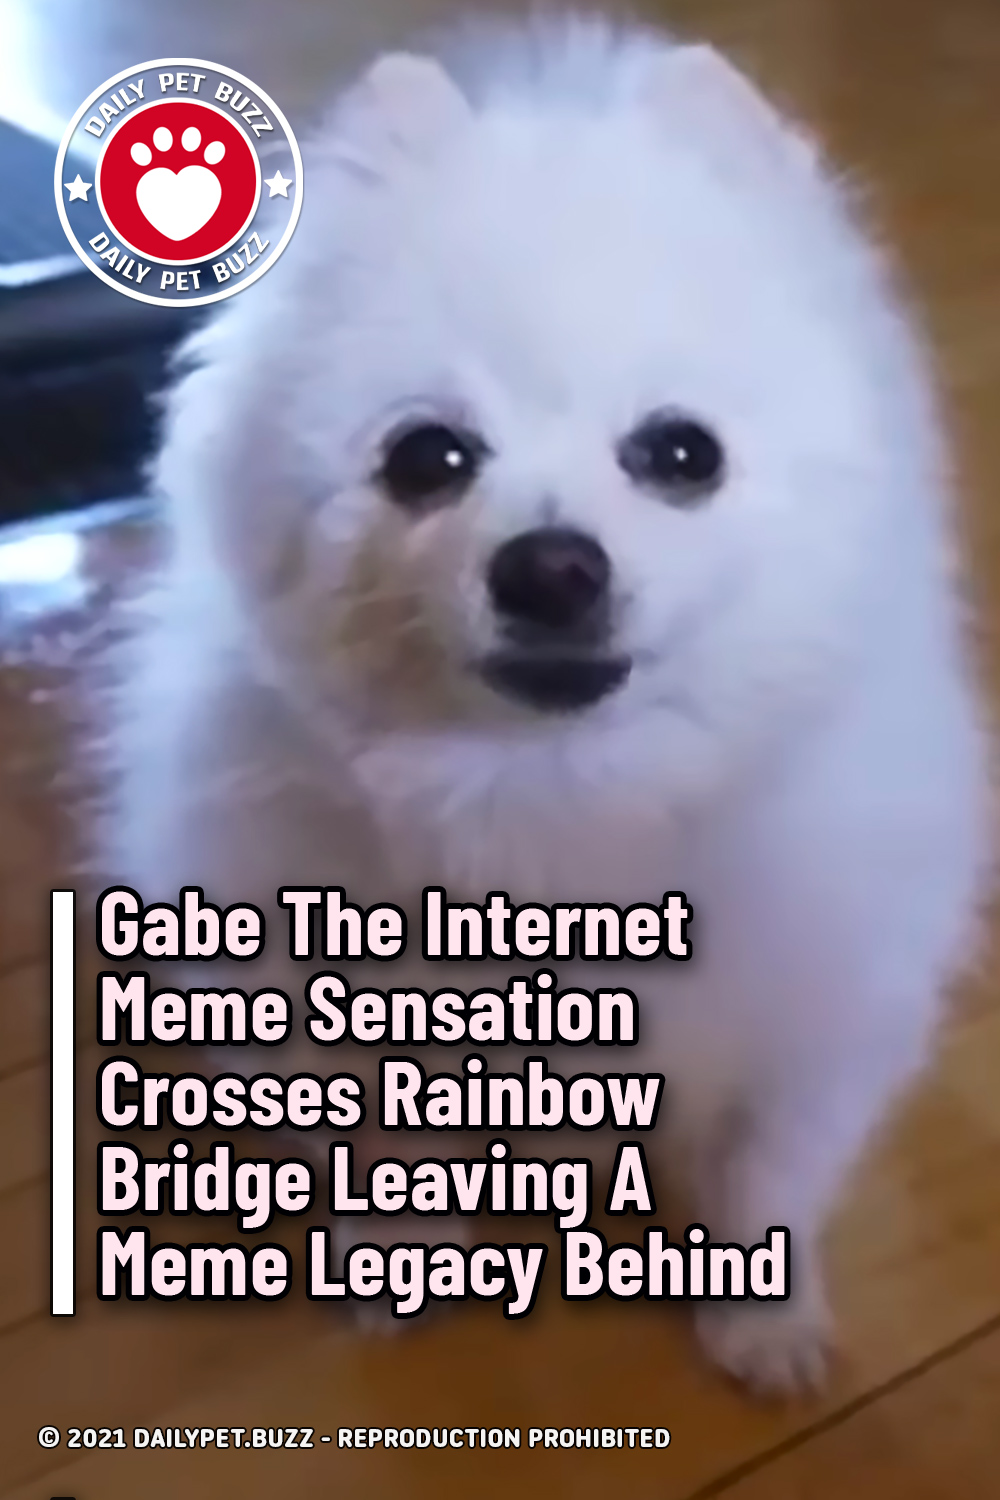 Gabe The Internet Meme Sensation Crosses Rainbow Bridge Leaving A Meme Legacy Behind